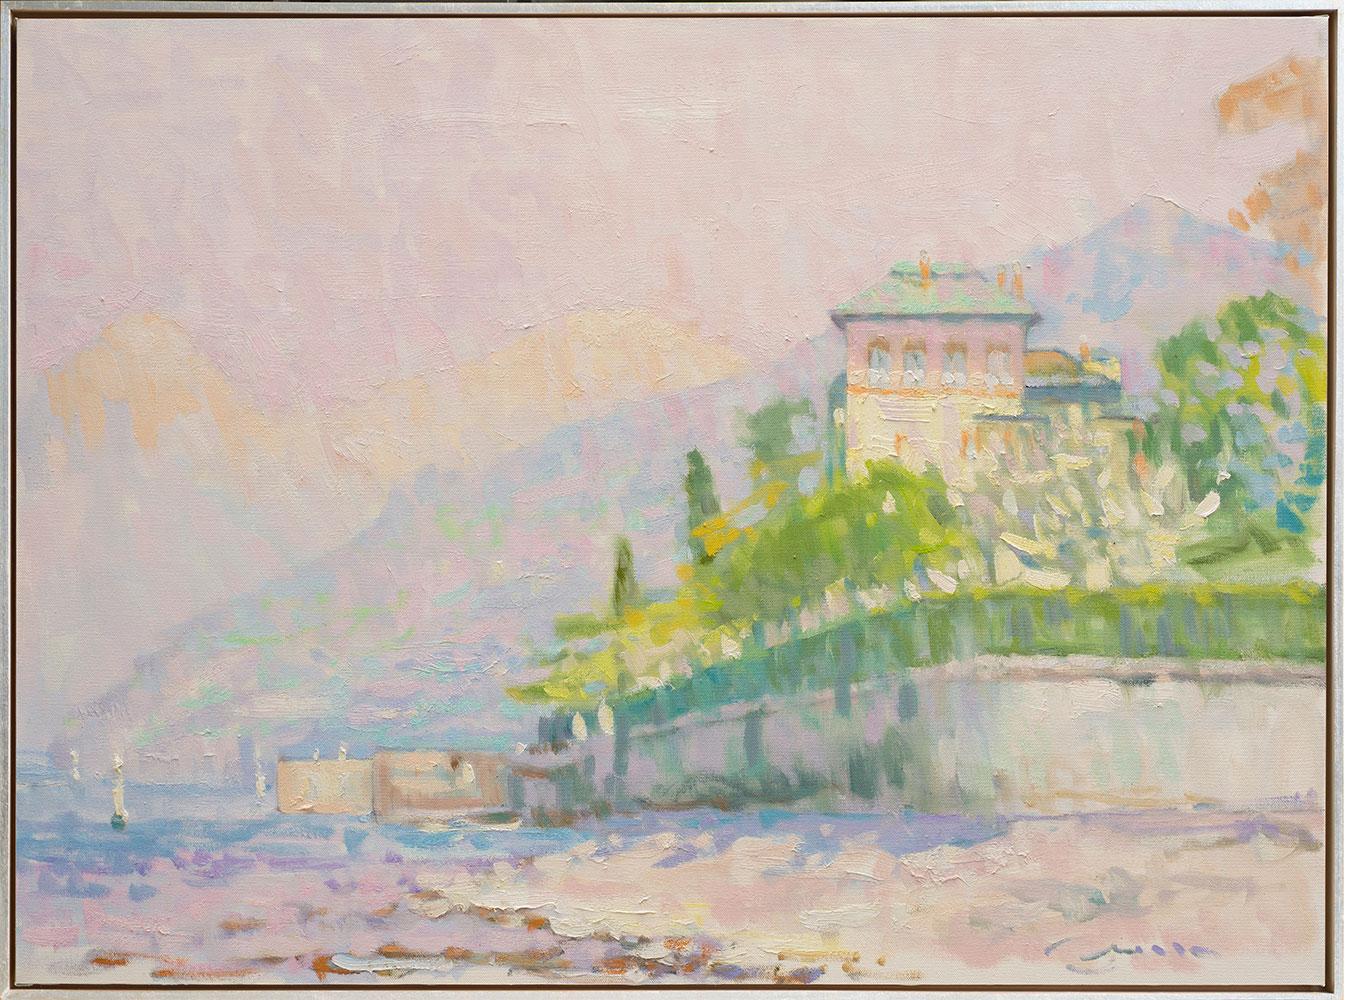 Jerry Fresia Landscape Painting - "Villa La Placida On A Brisk Day" - Impressionist landscape painting, plein air